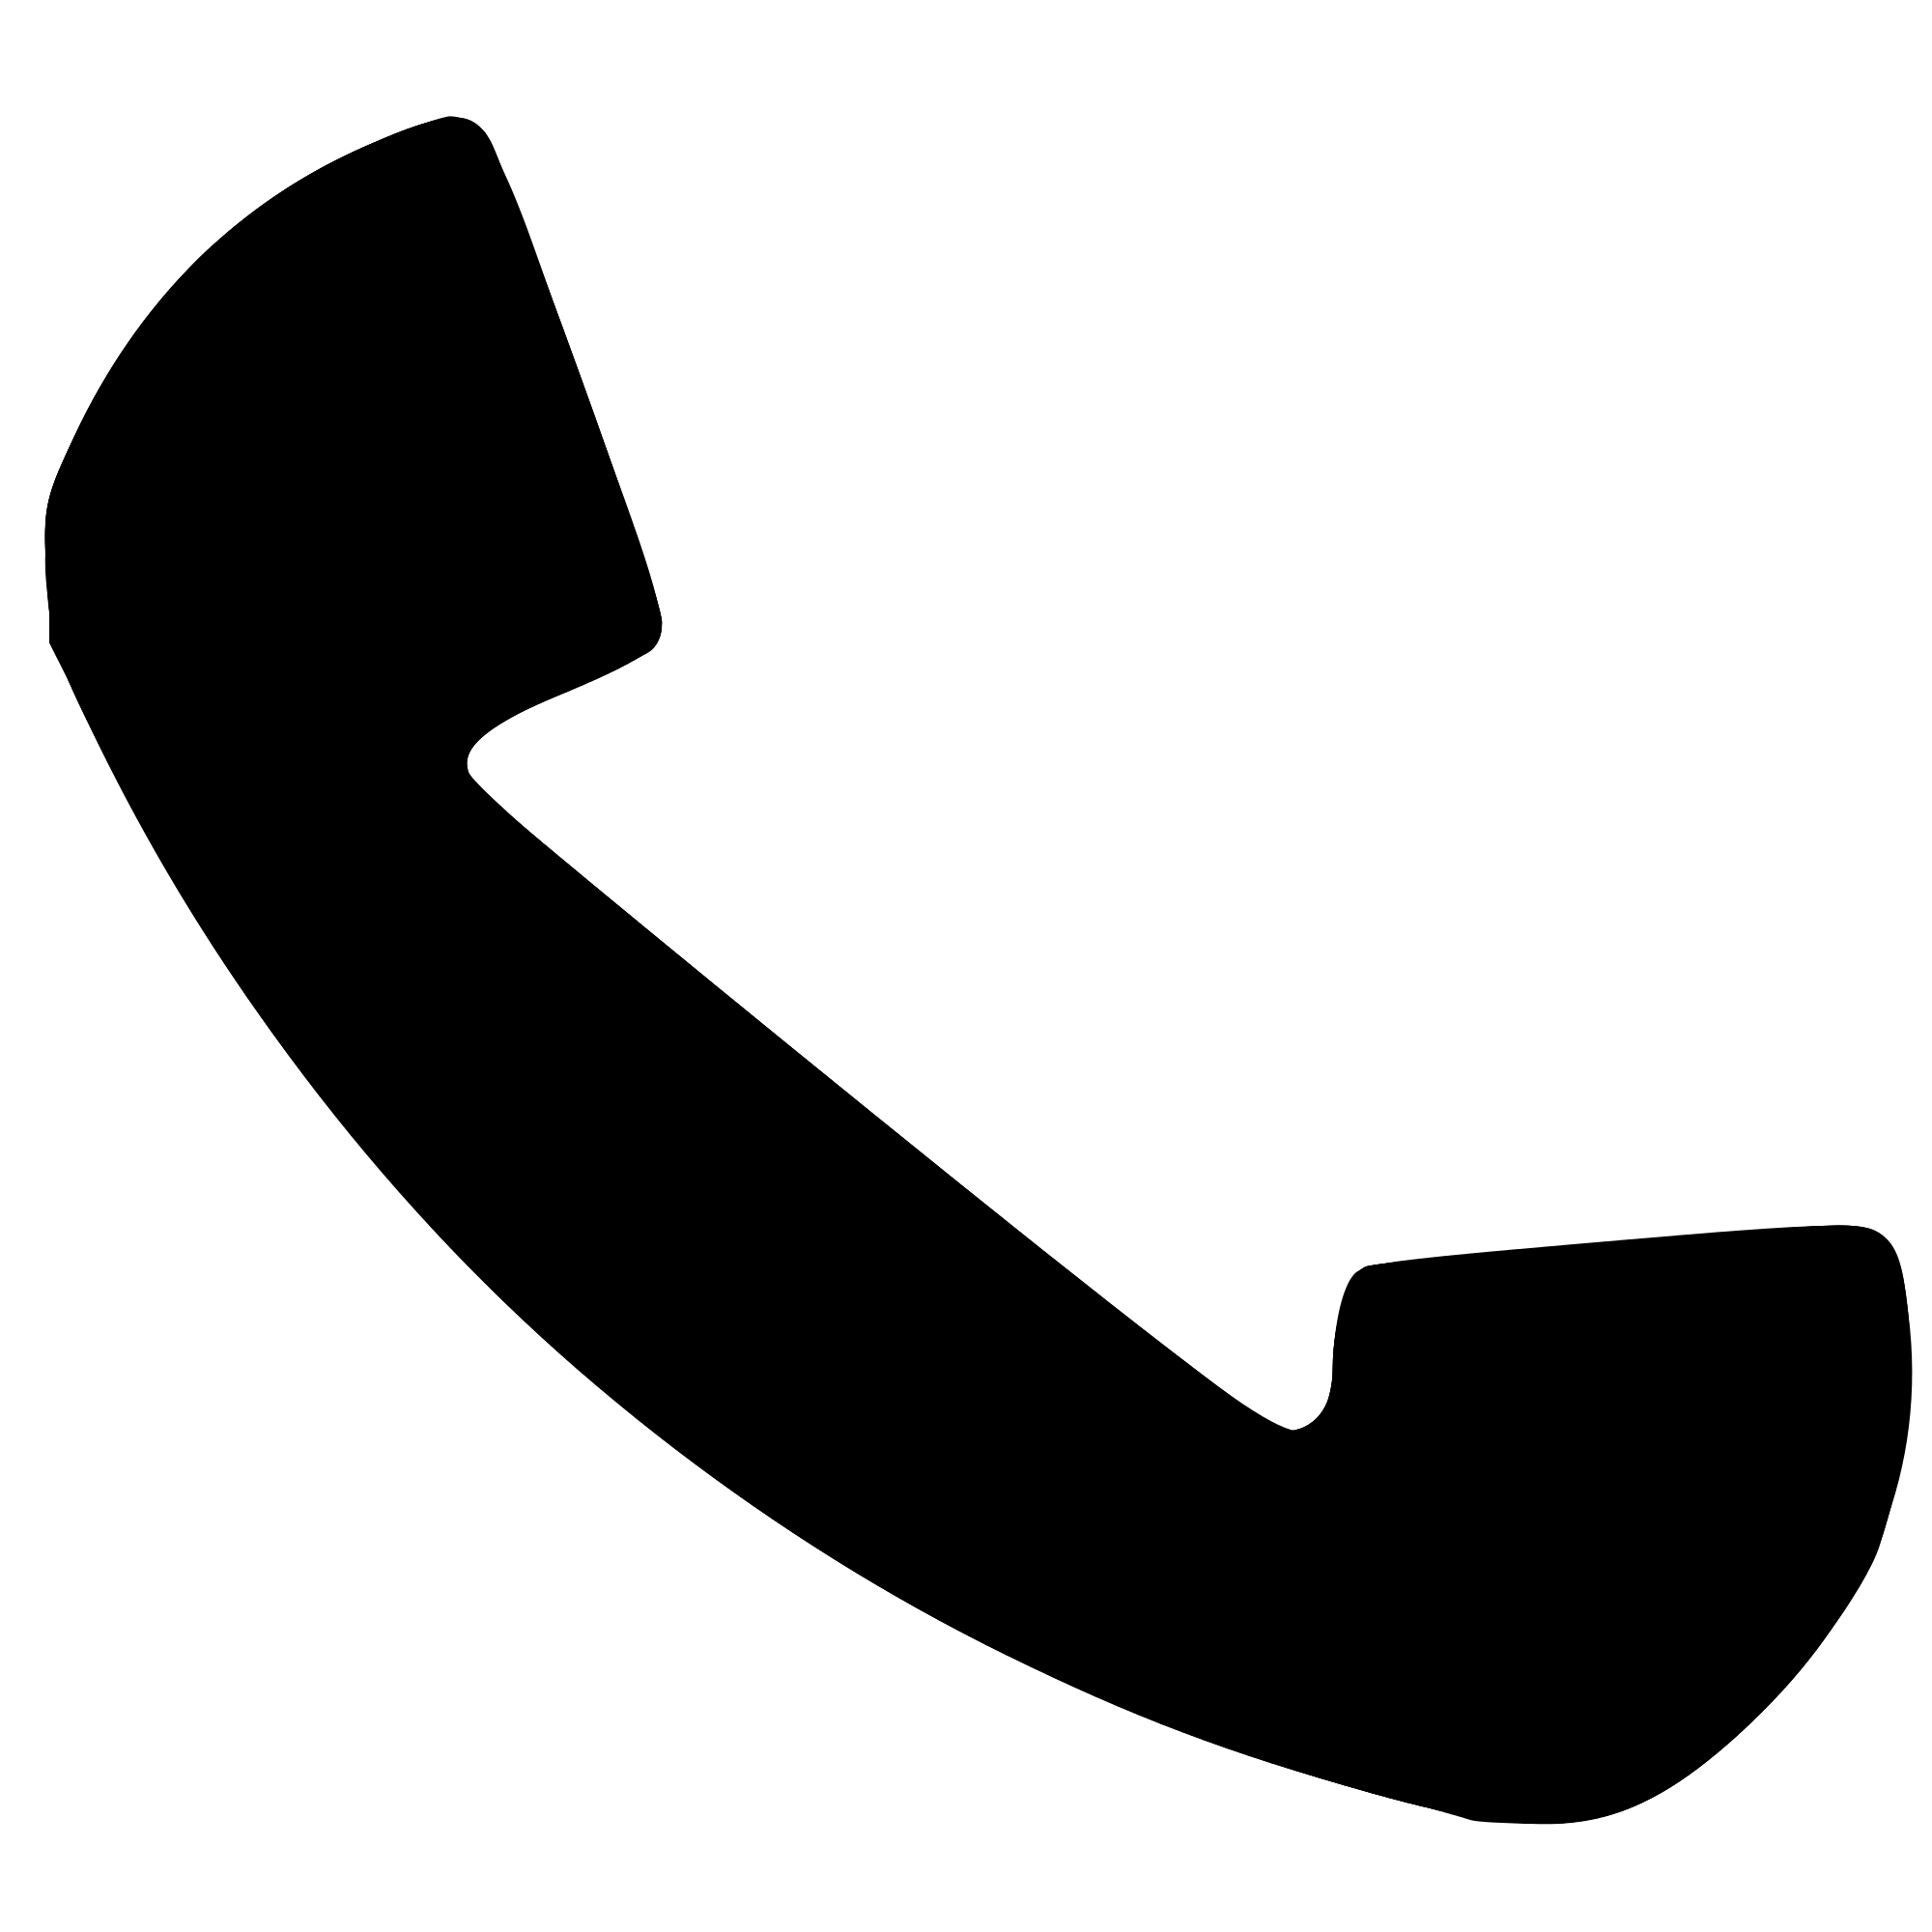 logo clipart telephone